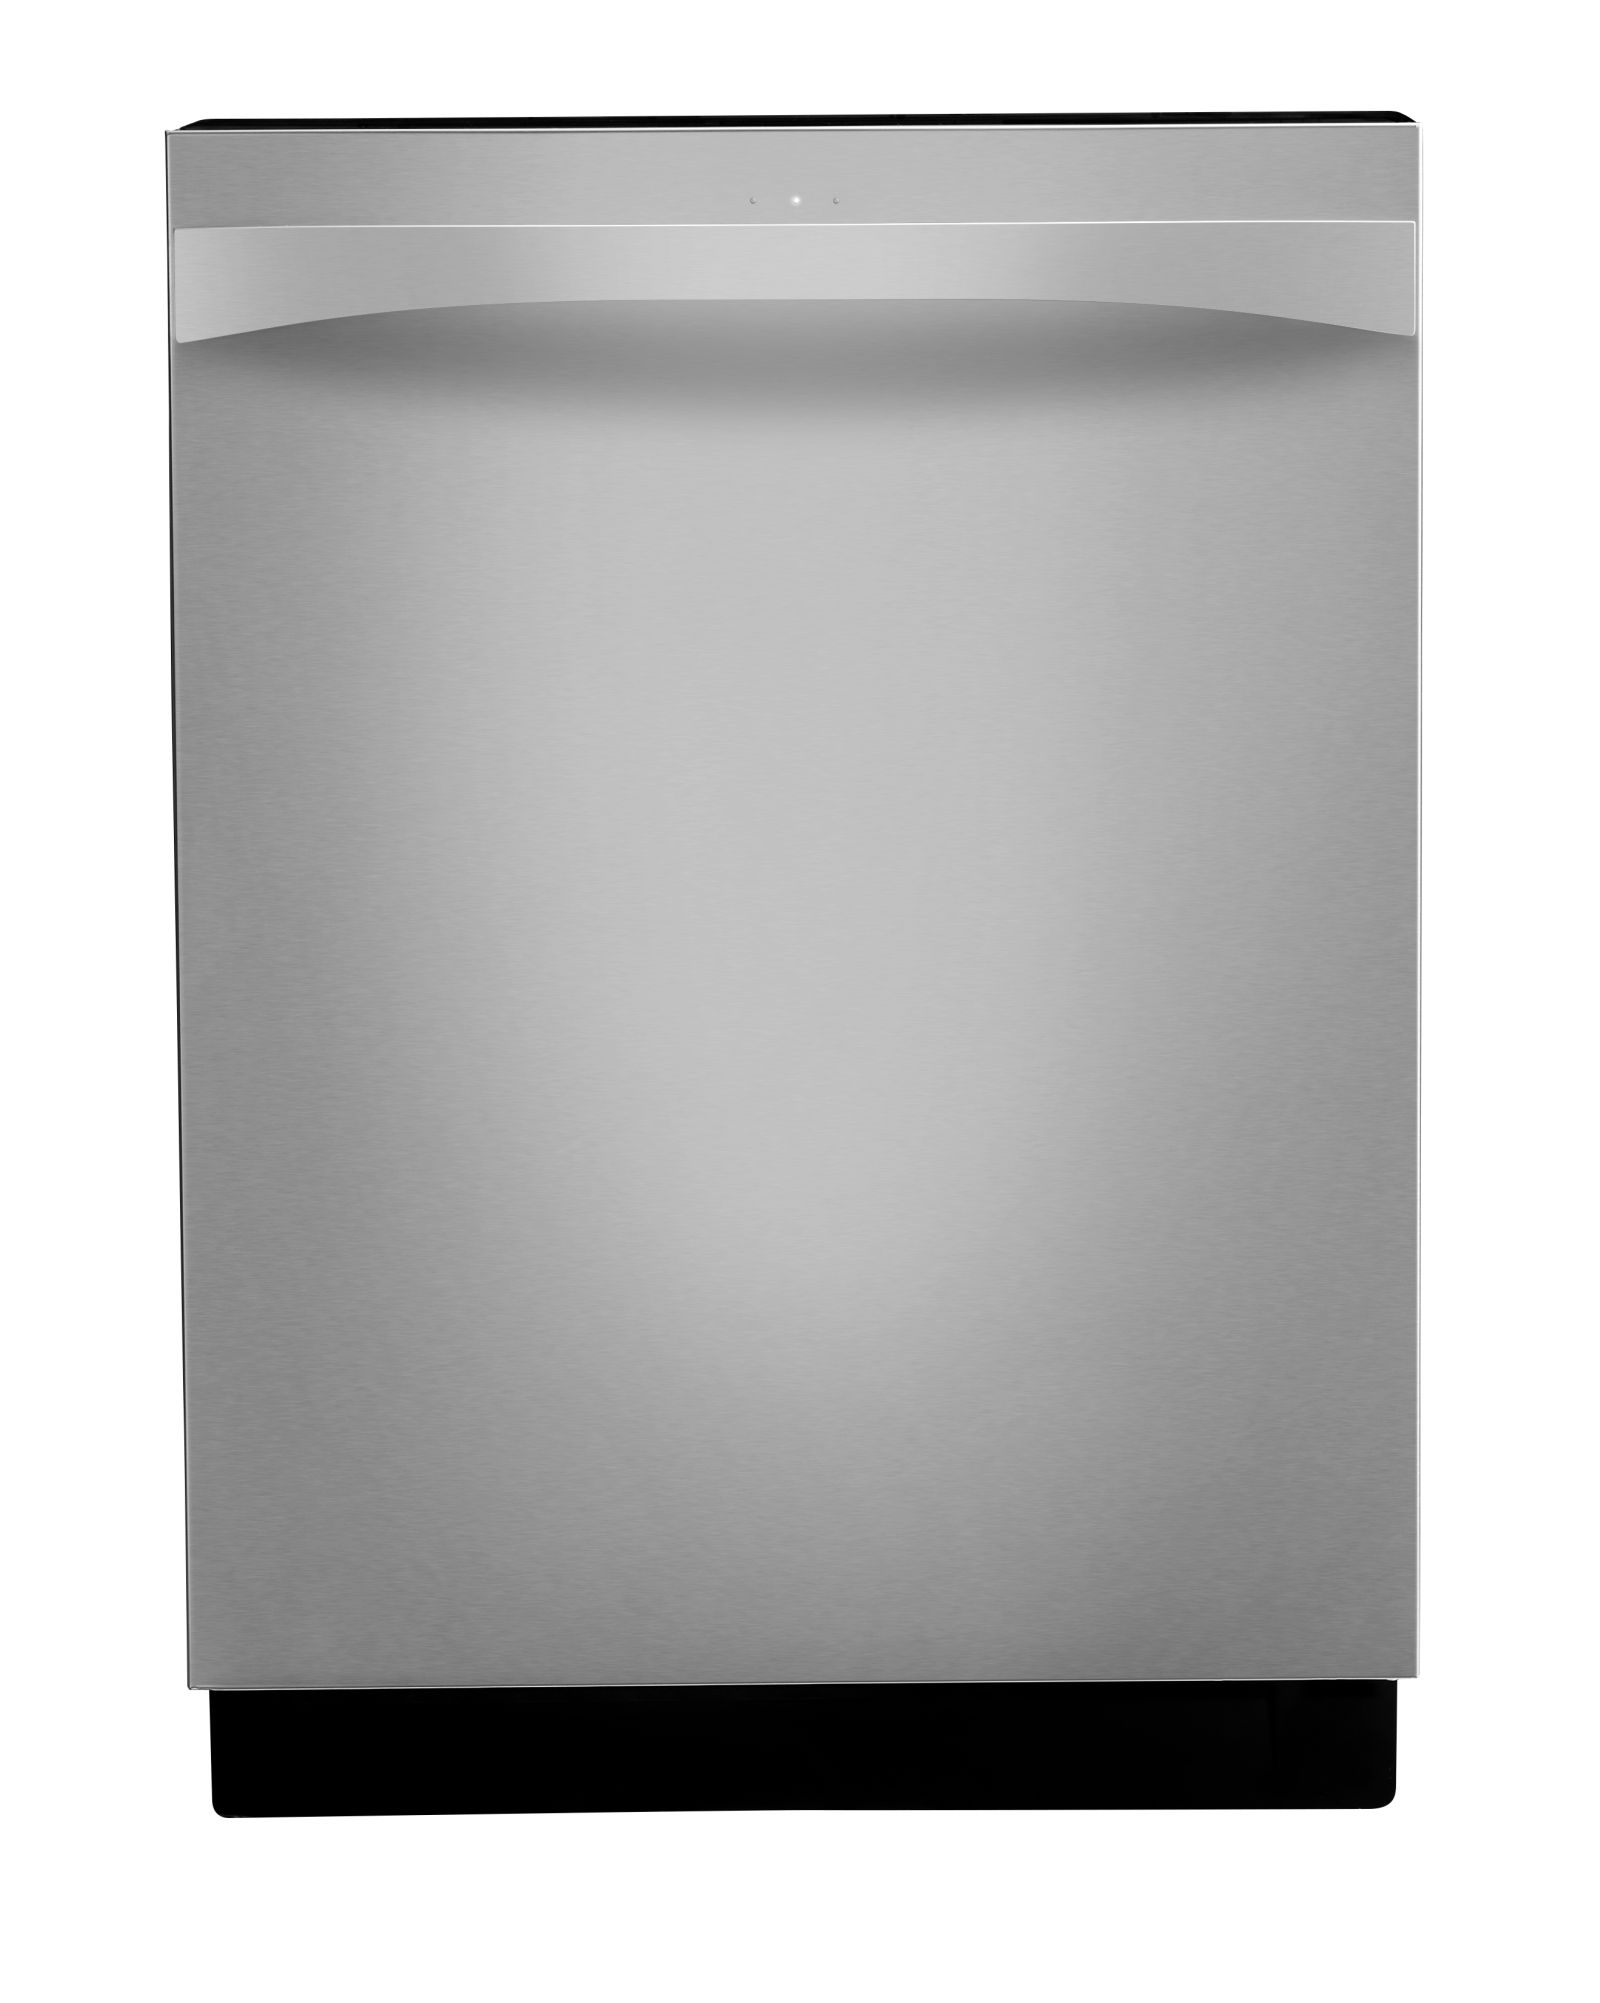 Kenmore Elite 14673 Smart Dishwasher 